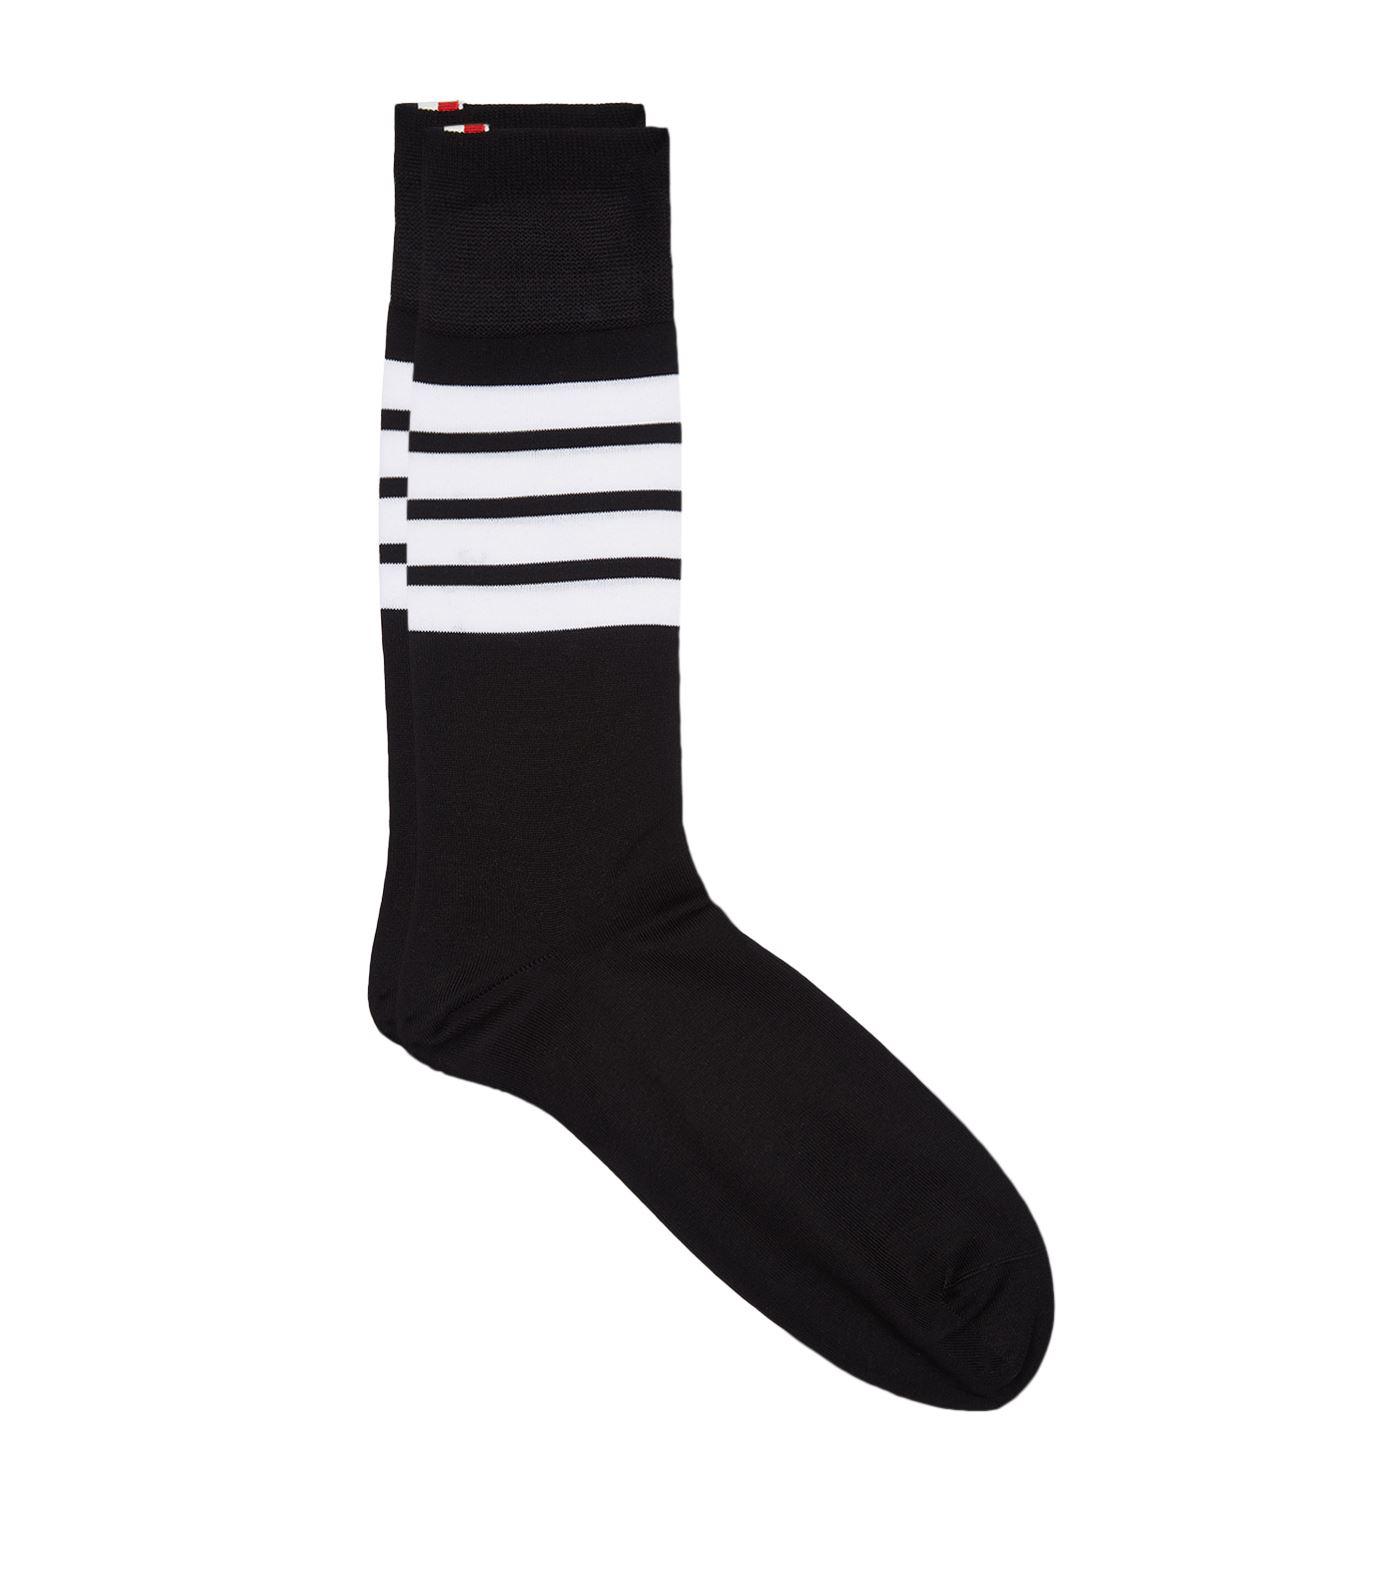 Thom Browne Cotton Striped Socks in Black for Men - Lyst